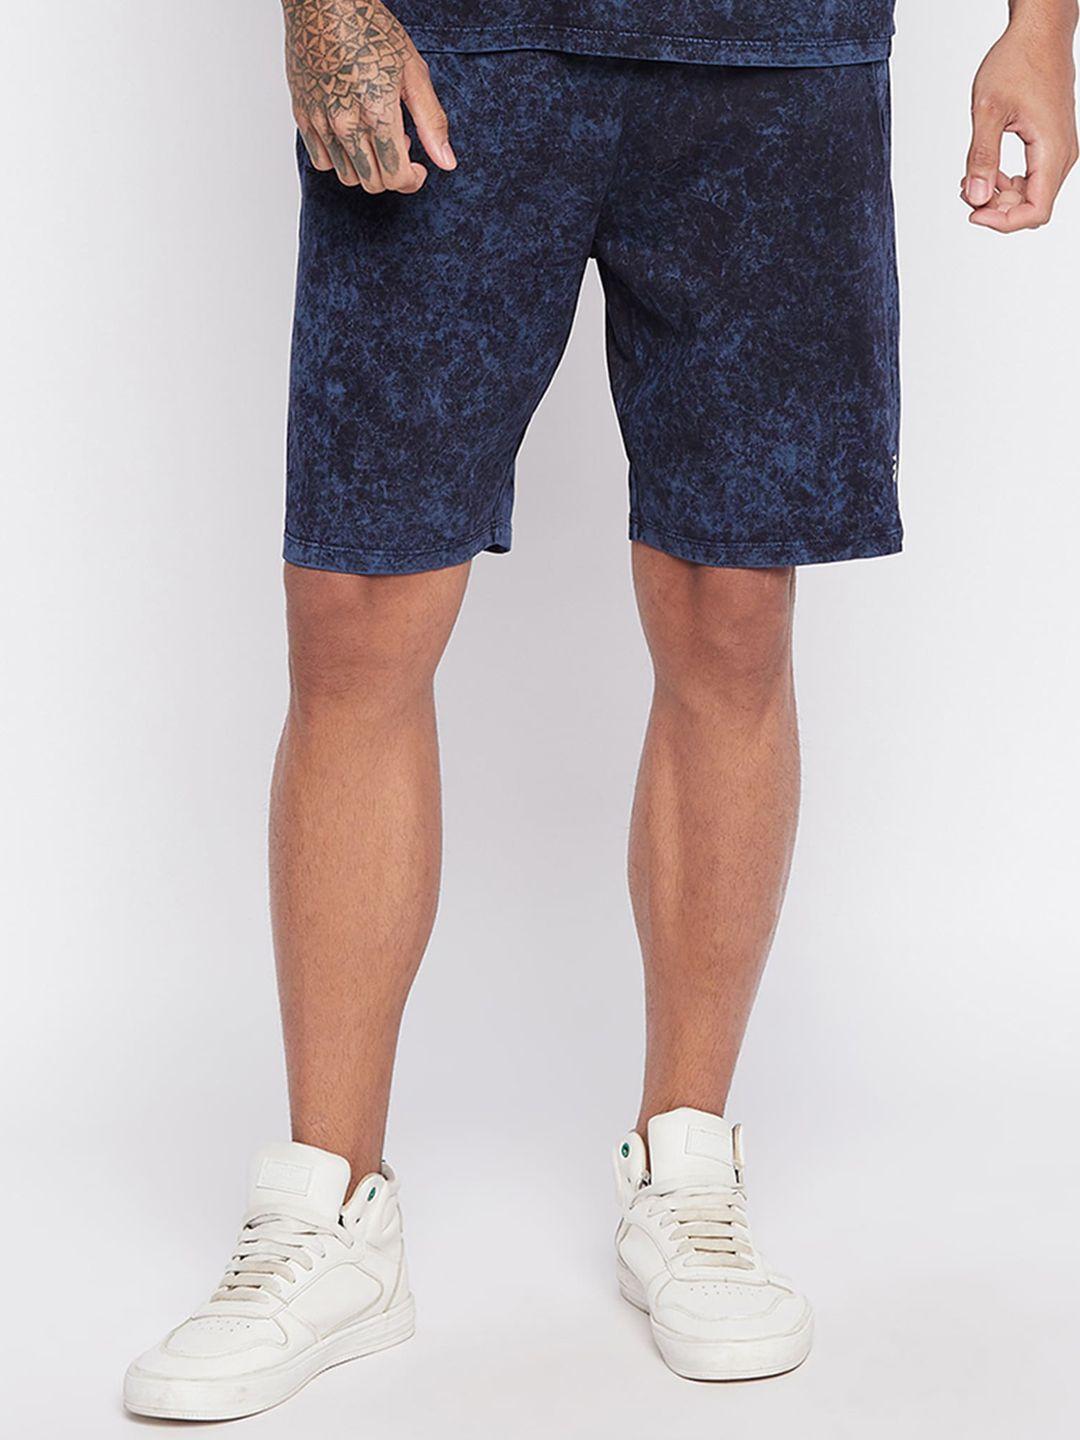 edrio men floral printed cotton shorts